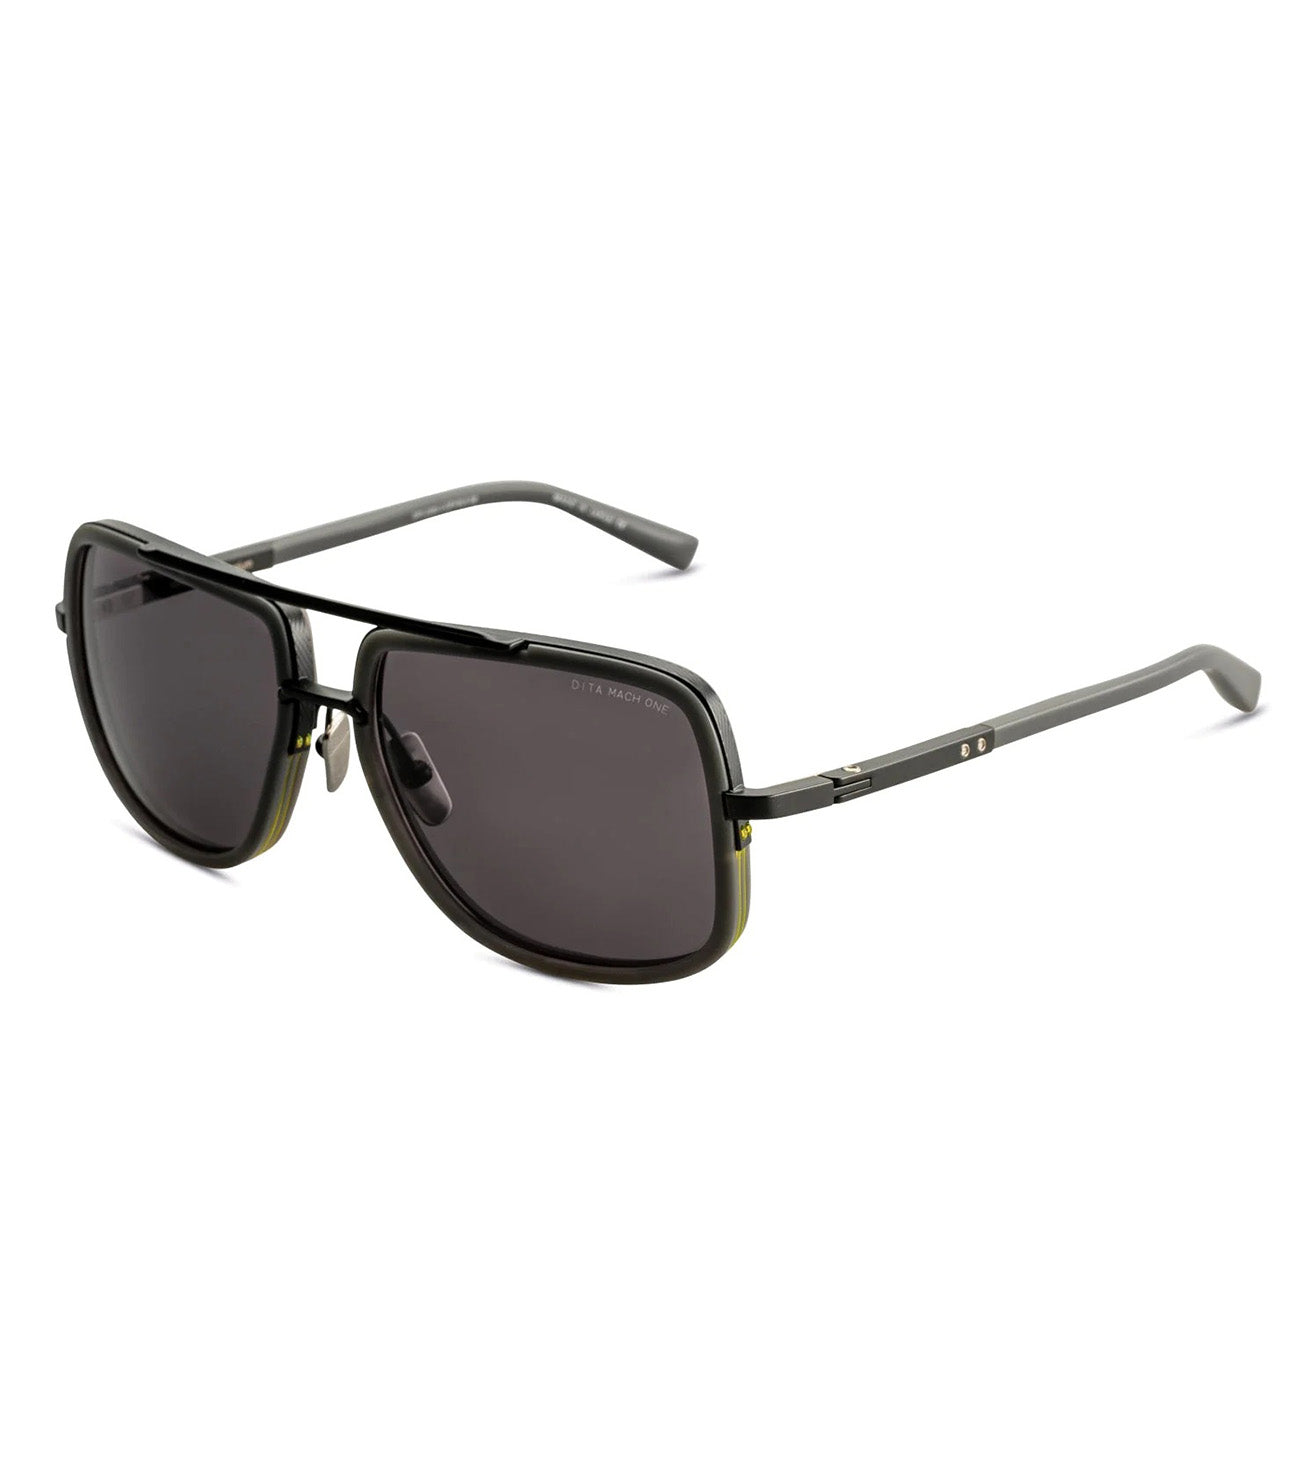 Dita Mach-One Men's Grey Aviator Sunglasses